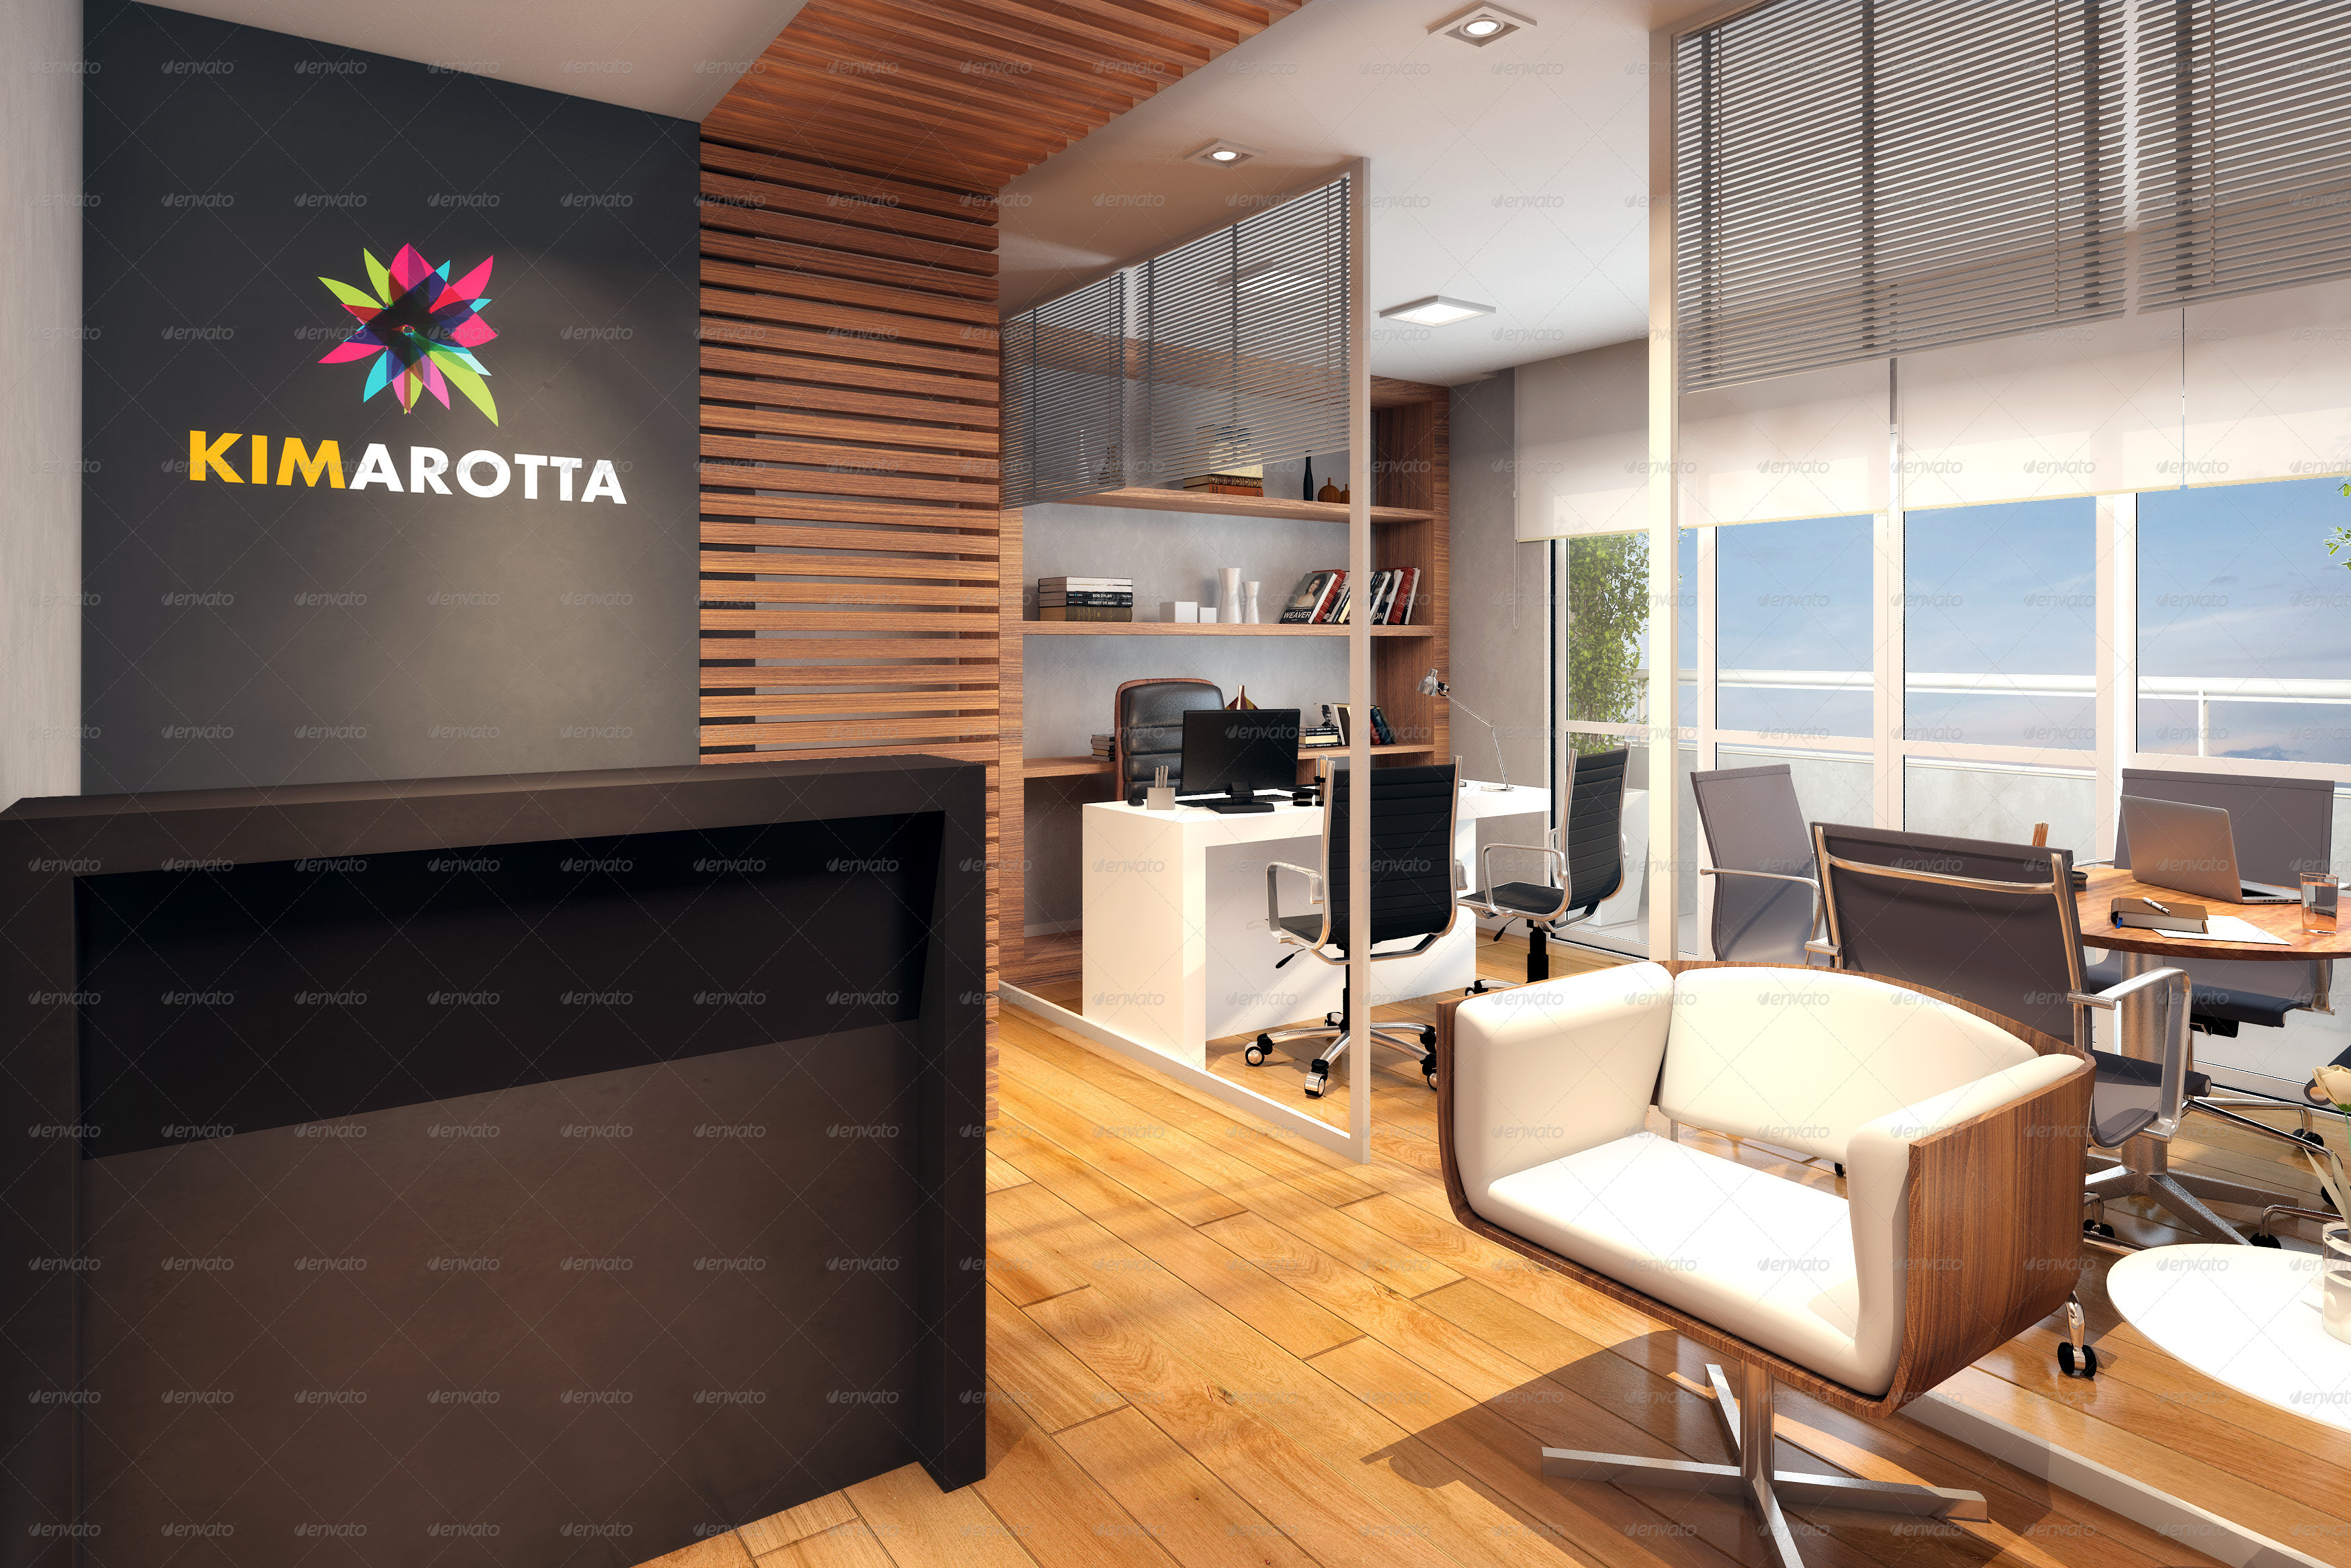 Download Building Office Branding Mockup by kimarotta | GraphicRiver